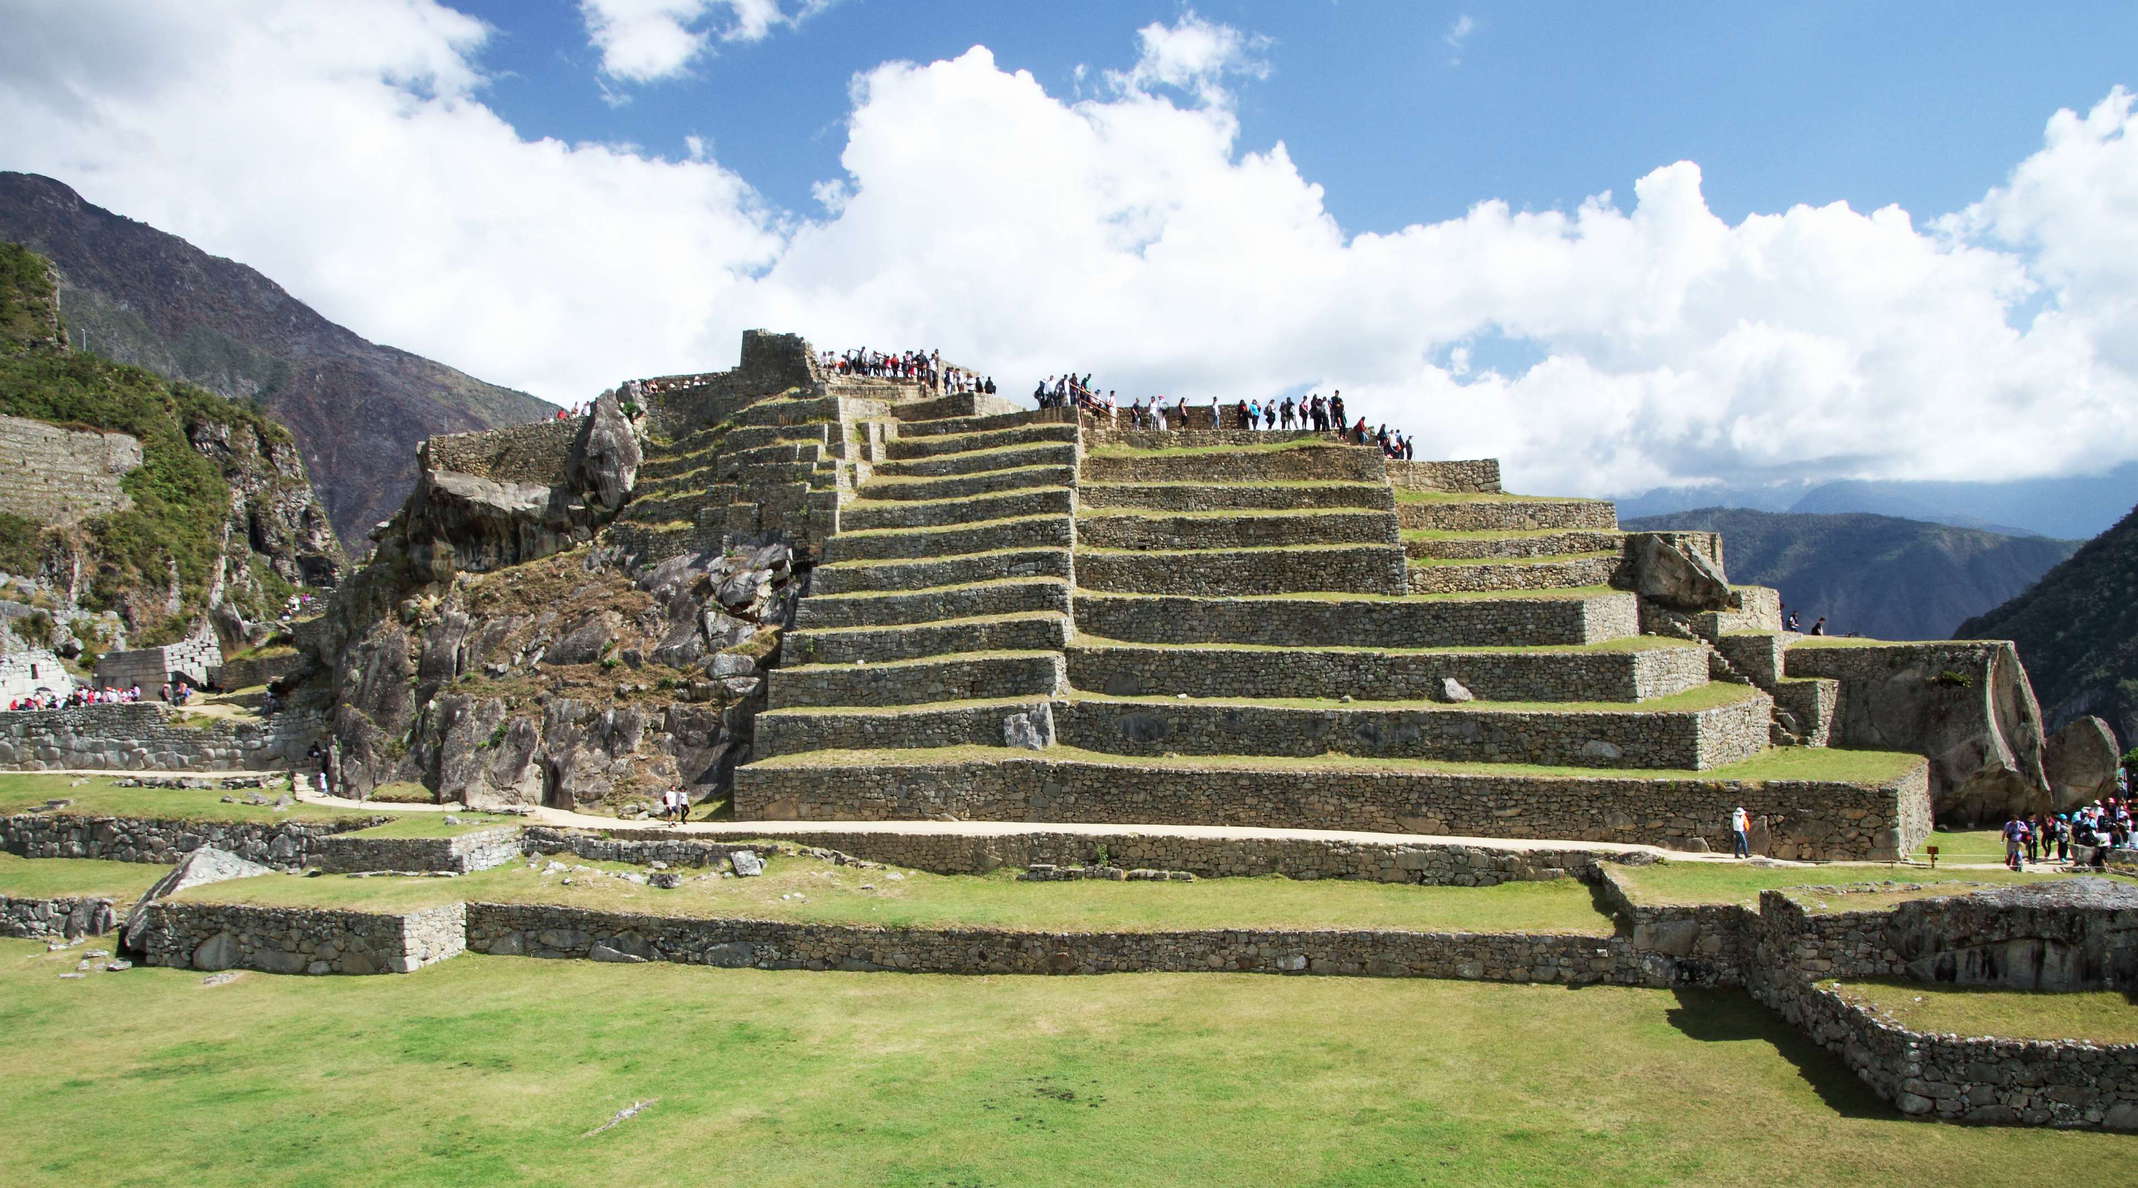 Machu Picchu | Upper town with terraces